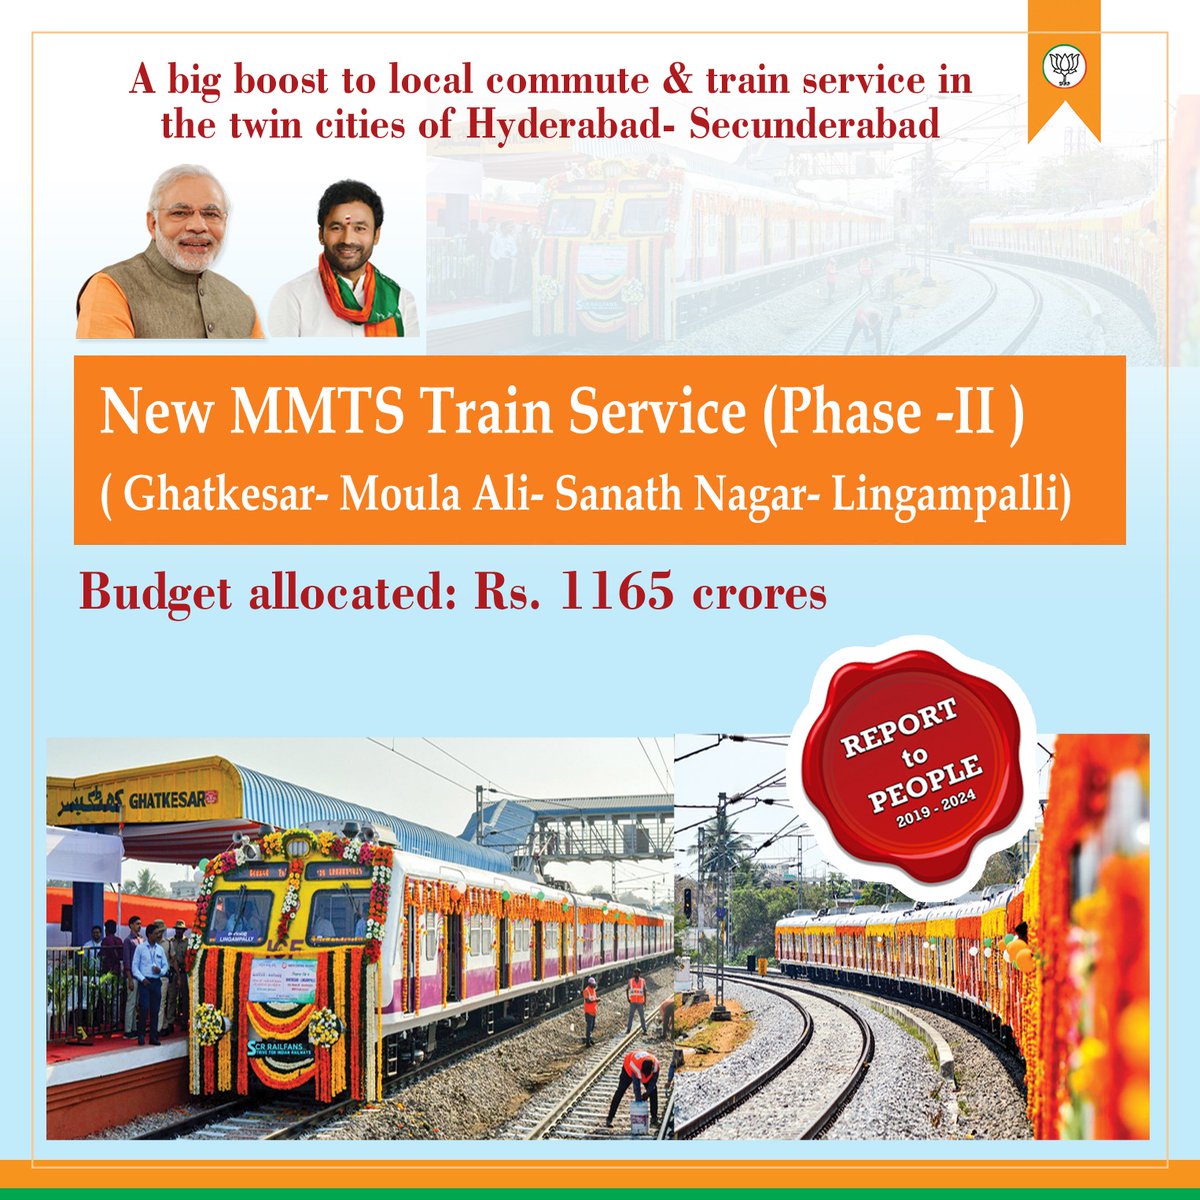 𝗘𝗻𝗵𝗮𝗻𝗰𝗶𝗻𝗴 𝗟𝗼𝗰𝗮𝗹 𝗖𝗼𝗺𝗺𝘂𝘁𝗲 𝗶𝗻 𝘁𝗵𝗲 𝗧𝘄𝗶𝗻 𝗖𝗶𝘁𝗶𝗲𝘀 𝗼𝗳 𝗛𝘆𝗱𝗲𝗿𝗮𝗯𝗮𝗱 𝗮𝗻𝗱 𝗦𝗲𝗰𝘂𝗻𝗱𝗲𝗿𝗮𝗯𝗮𝗱

Phase II of the new MMTS train service links eastern zones (Ghatkesar-Moula Ali) to western areas (Sanath Nagar-Lingampalli) of the